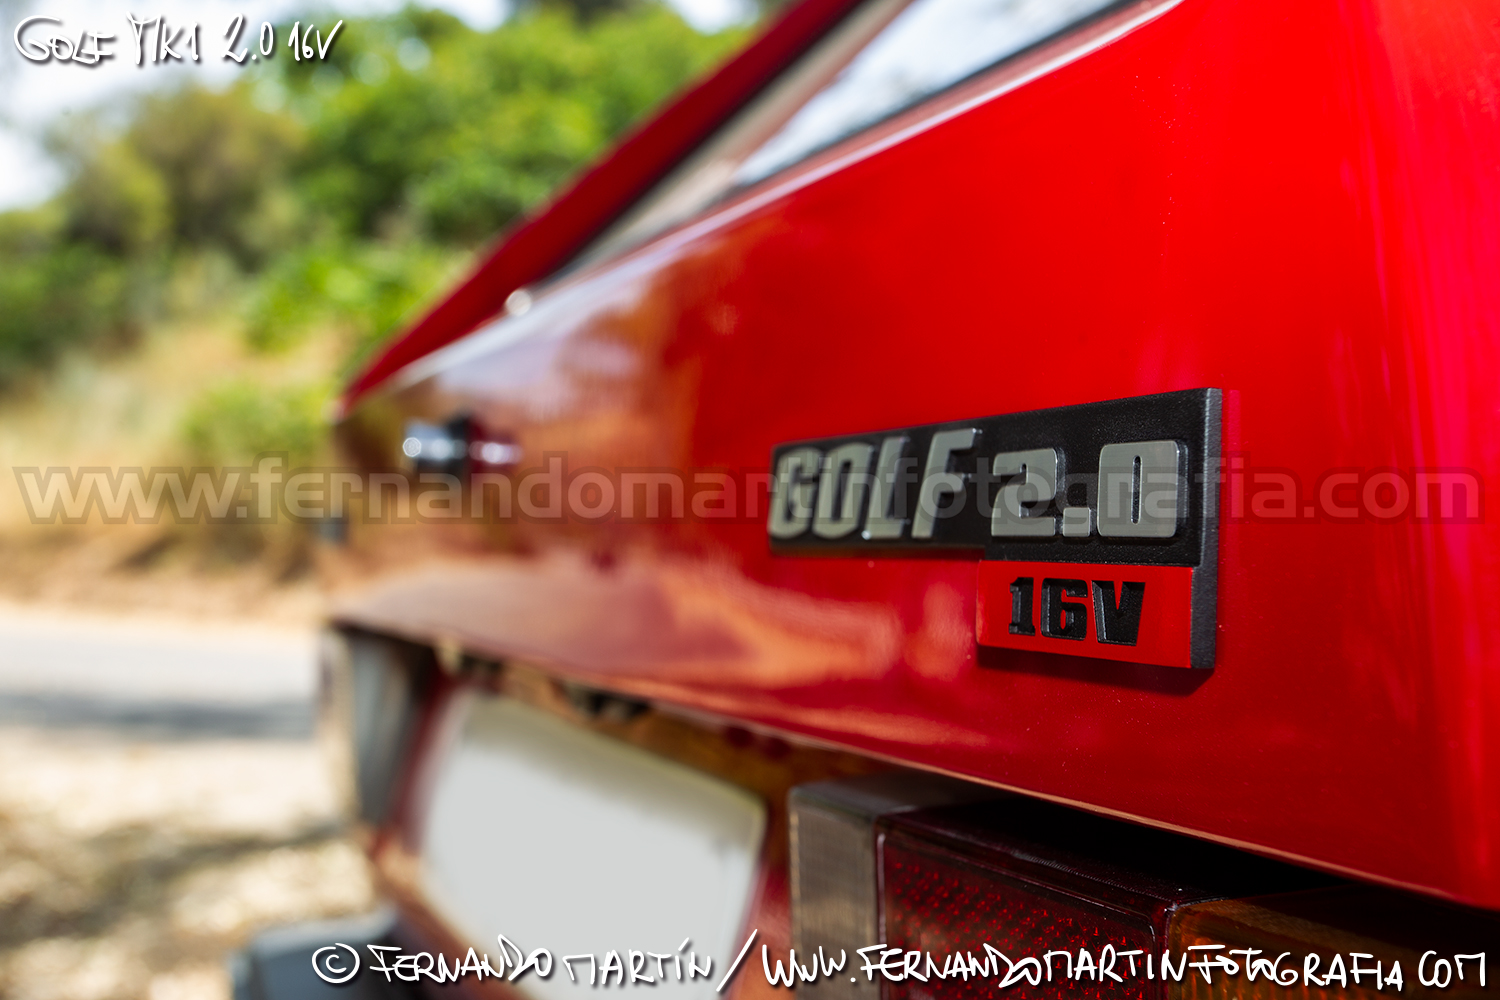 VW Golf MK1 swap 2.0 16v